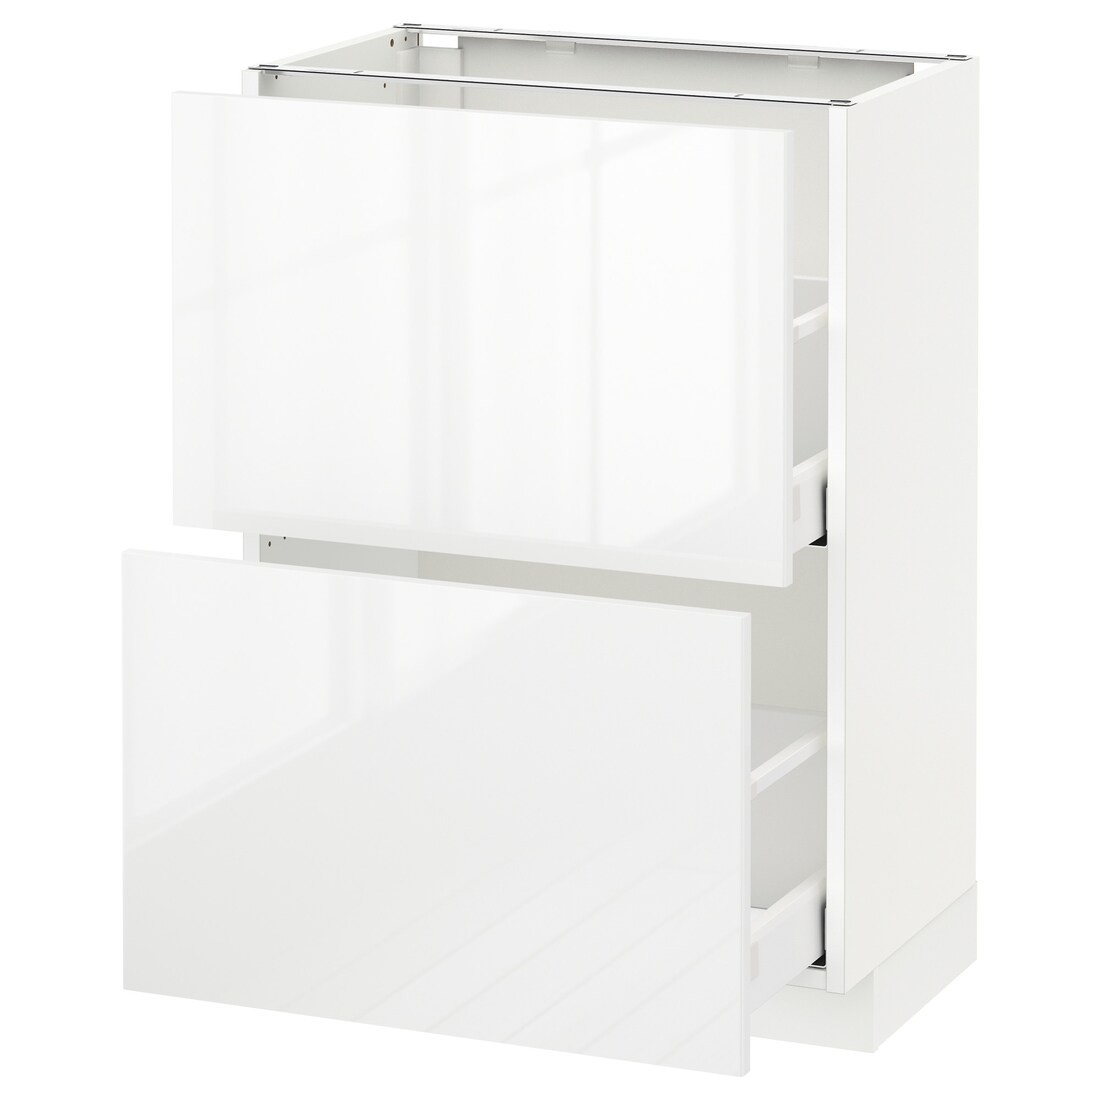 IKEA METOD МЕТОД / MAXIMERA МАКСИМЕРА Шкаф / 2 ящика, белый / Ringhult белый, 60x37 см 89051454 890.514.54